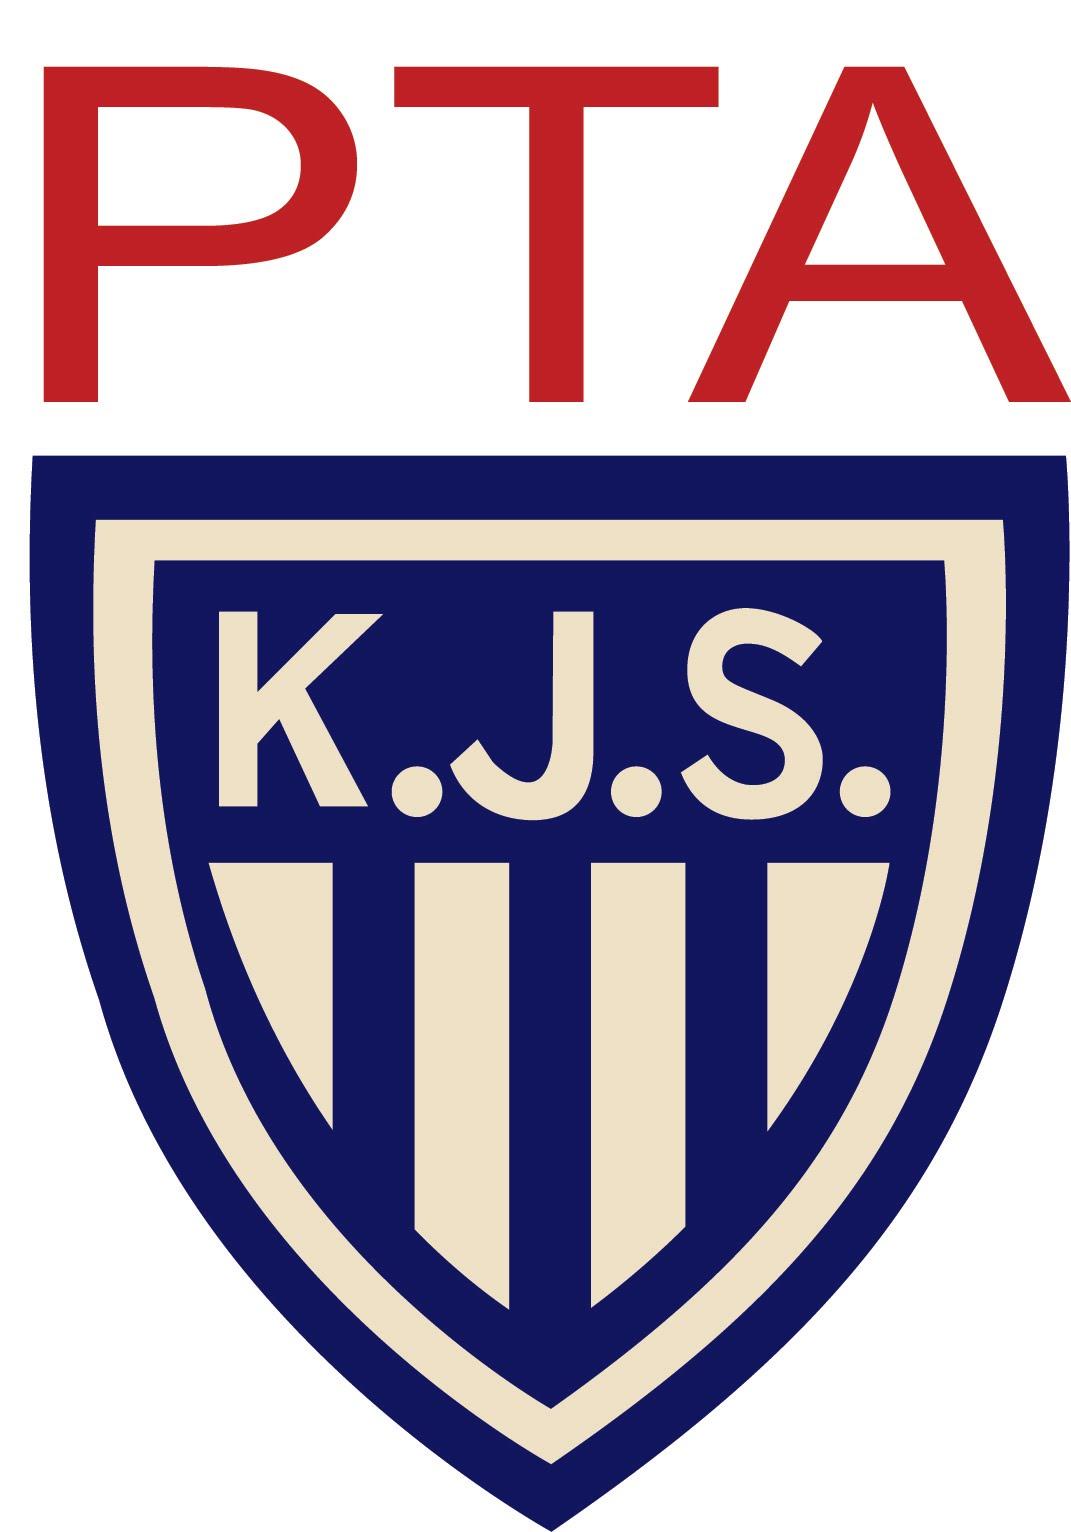 PTA logo blue